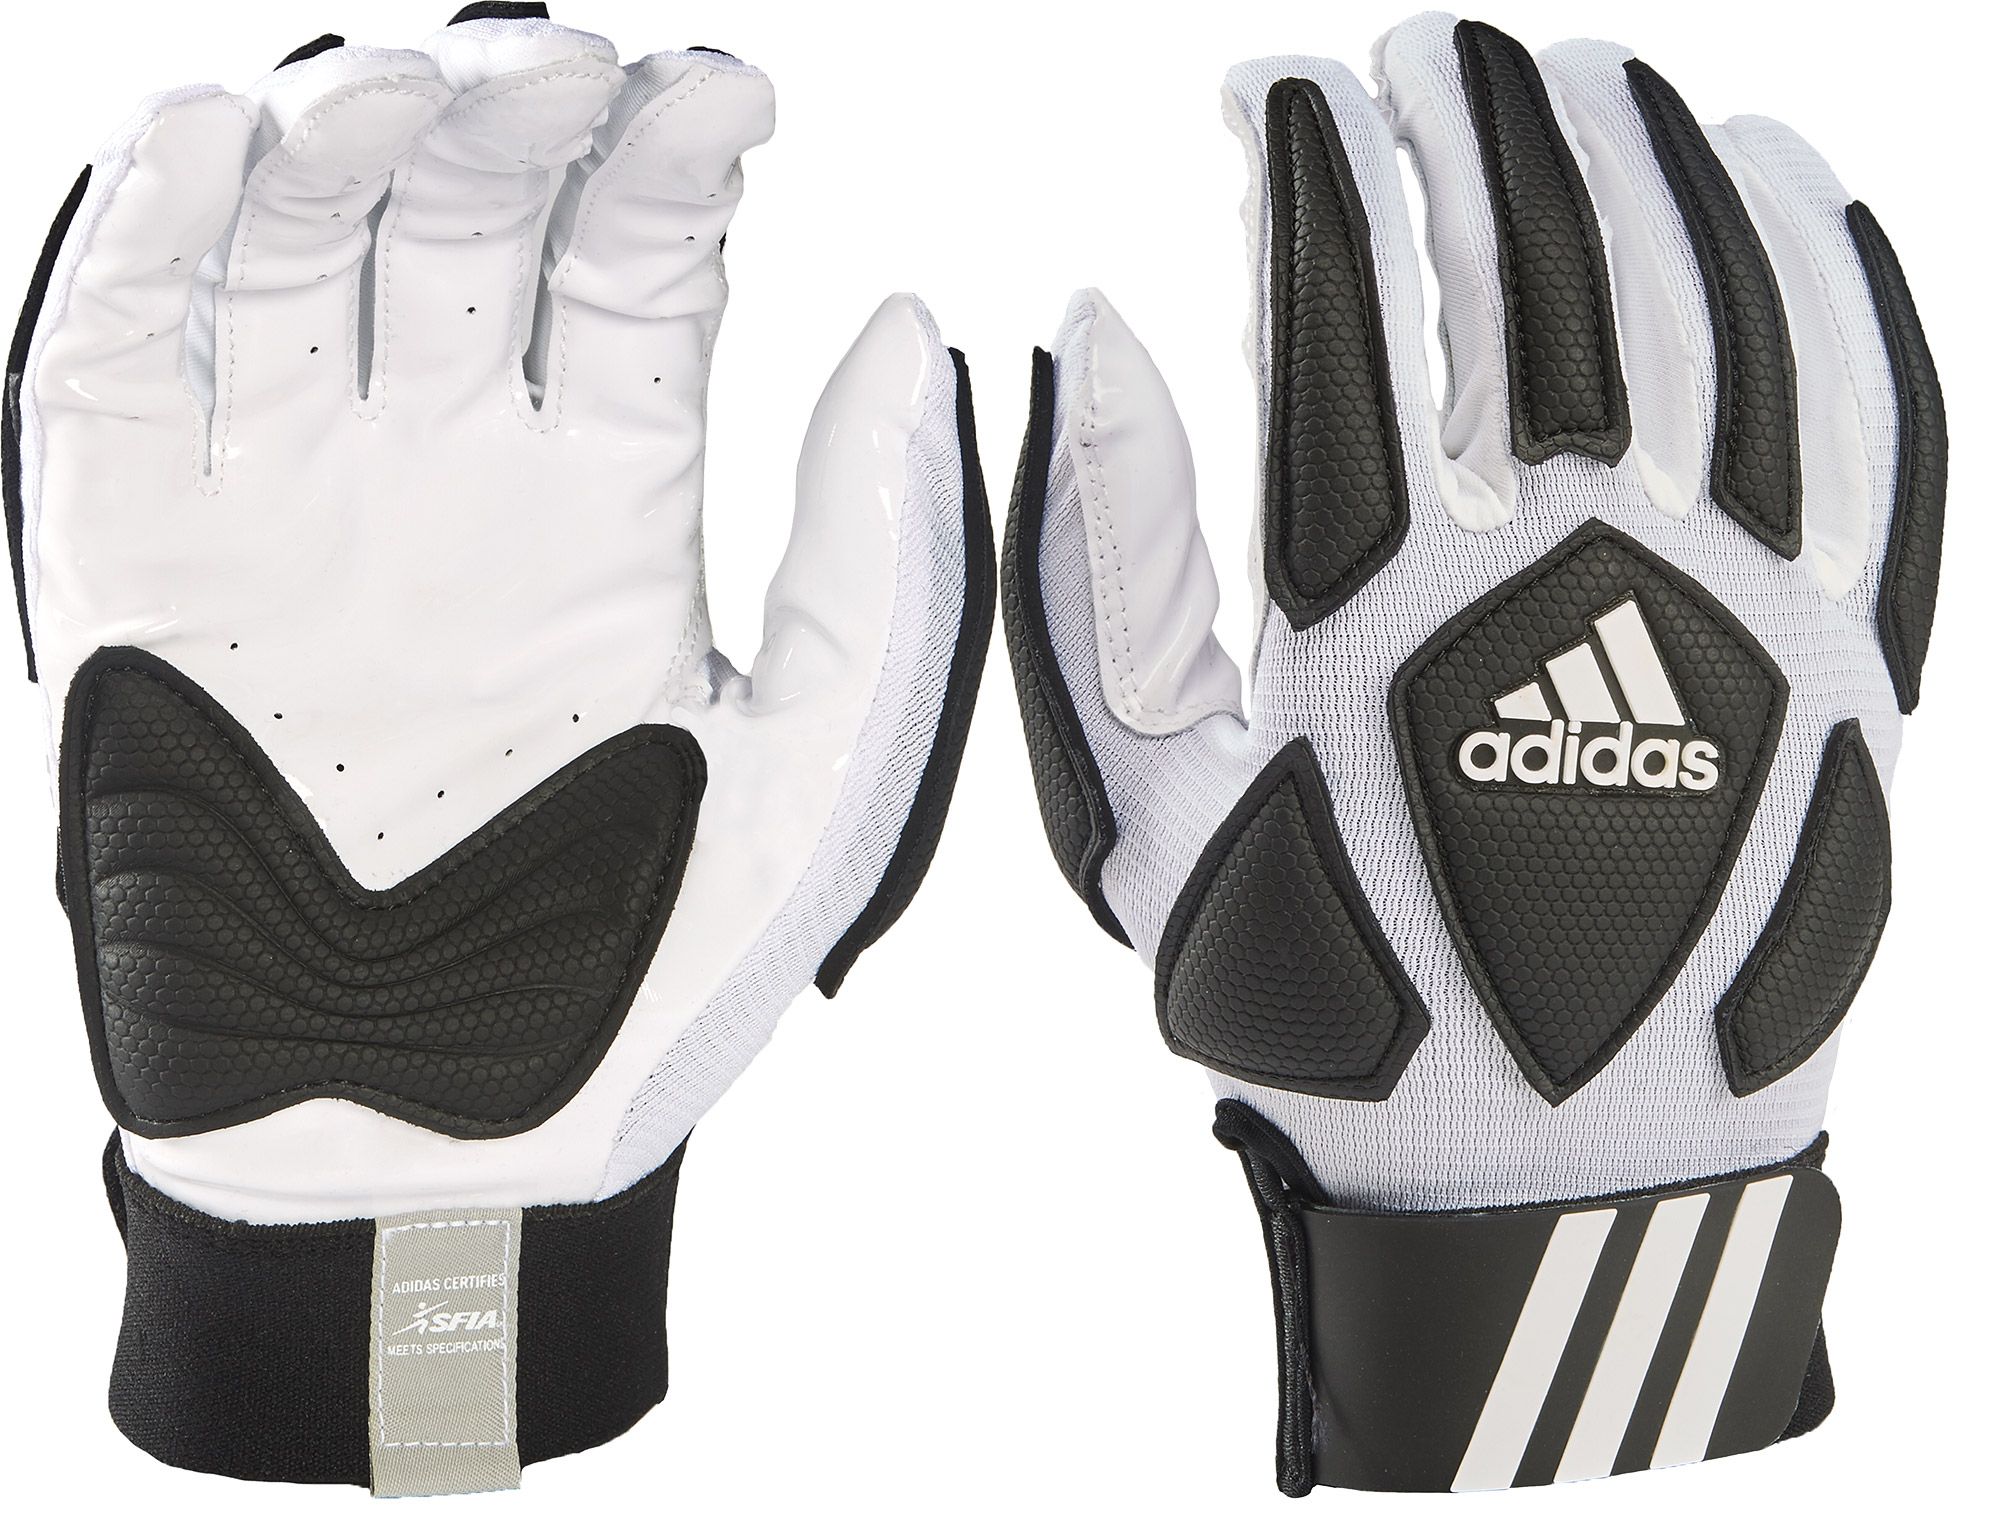 adidas scorch light 4 gloves